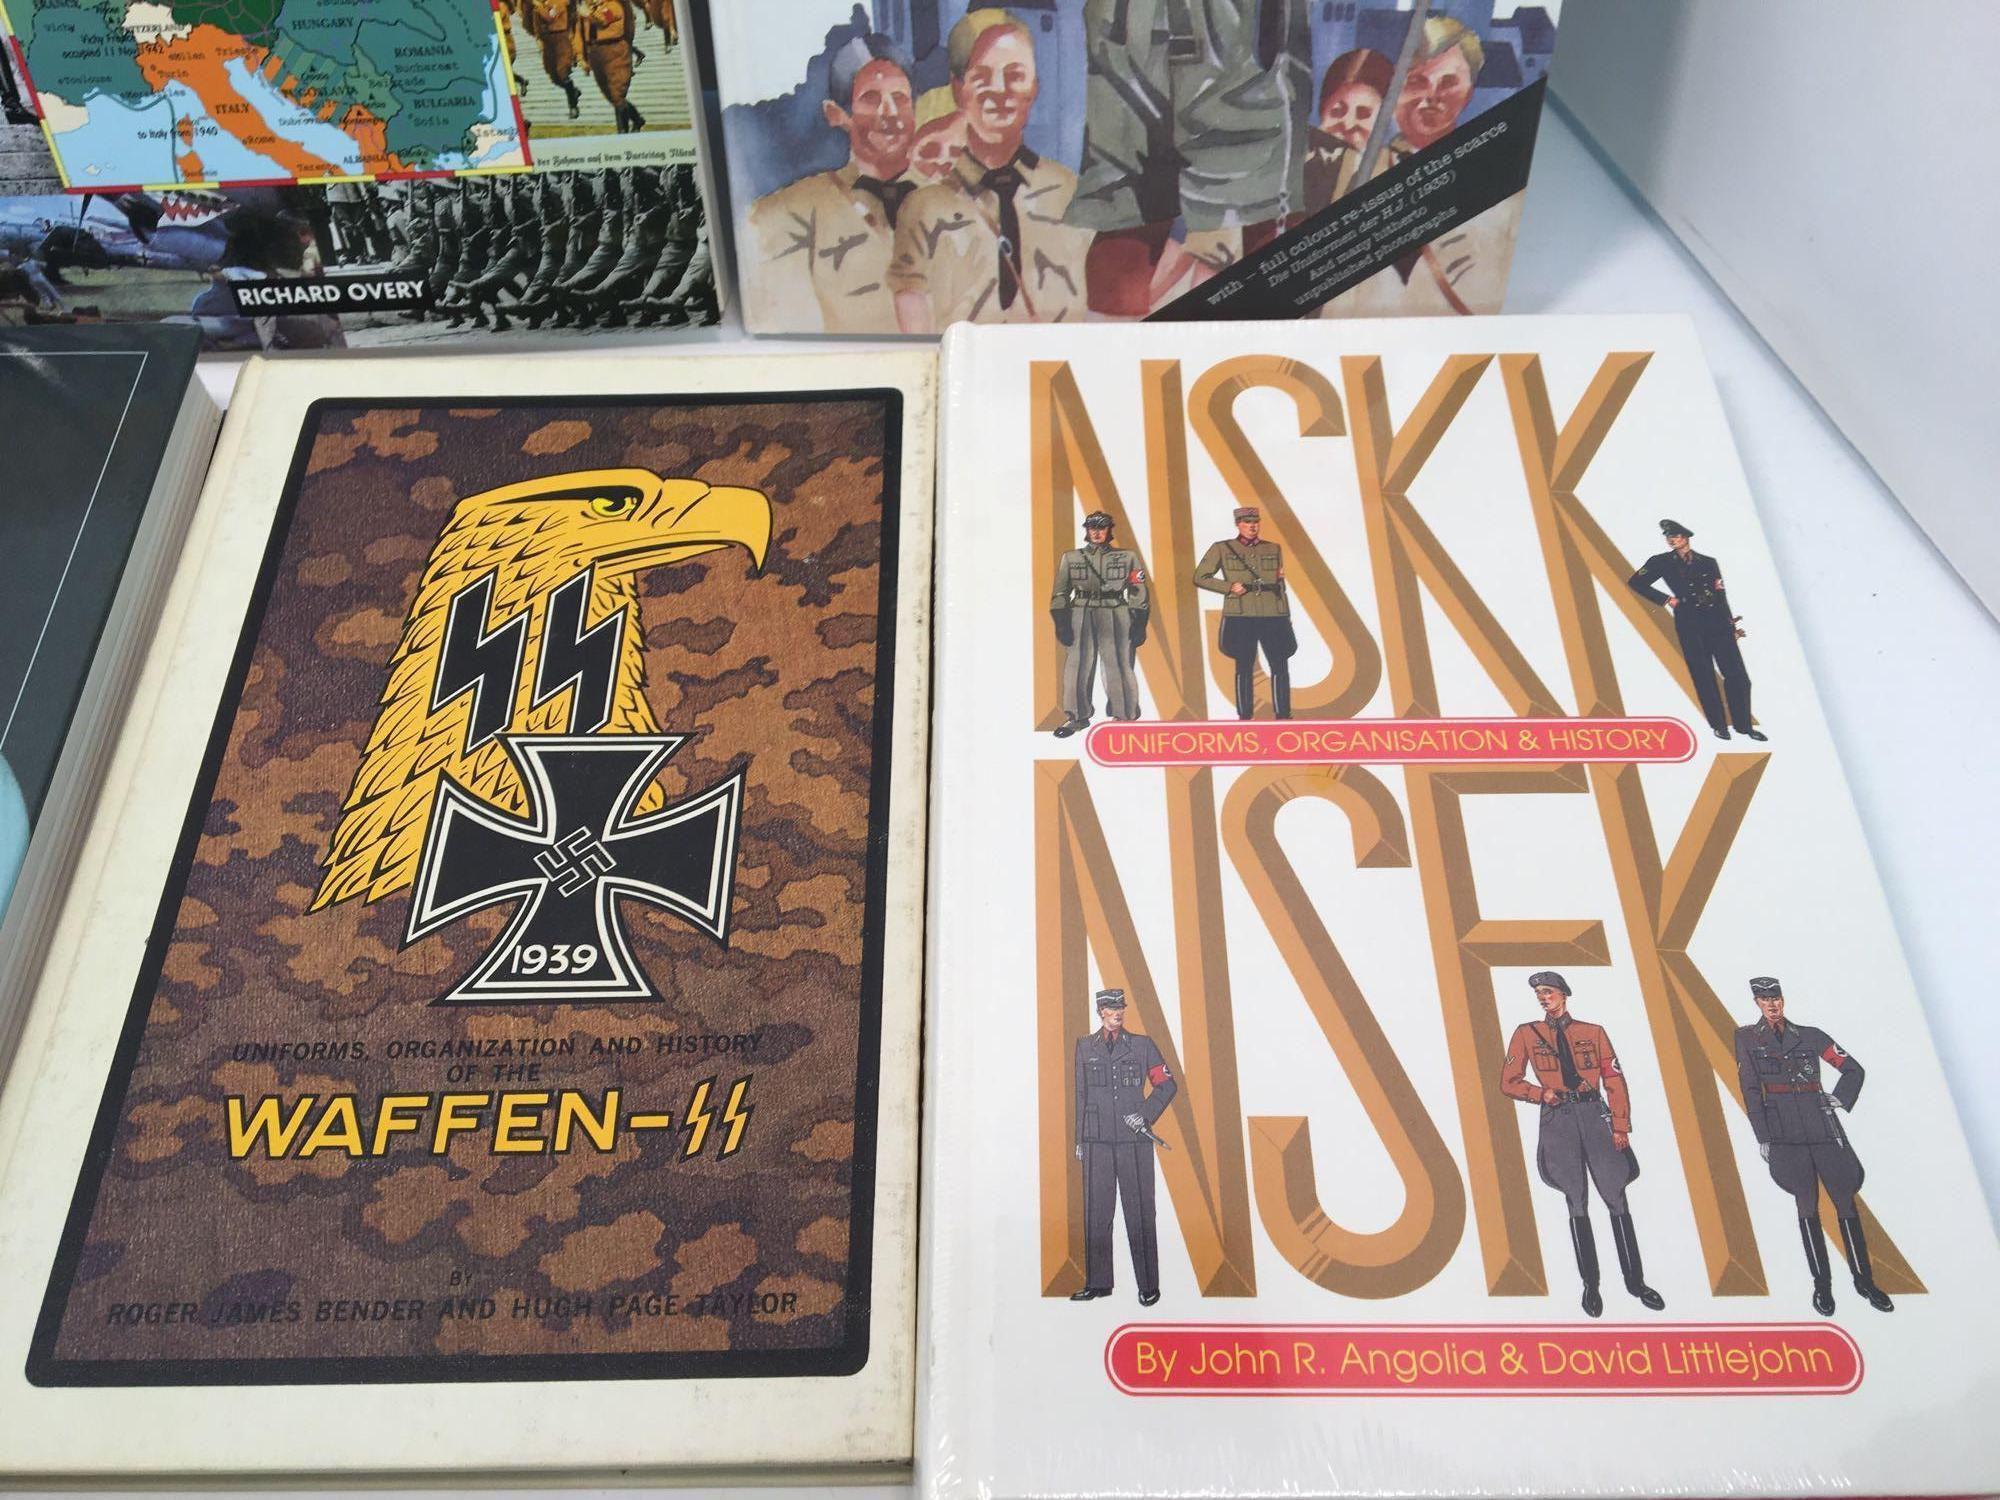 German/Nazi themed books